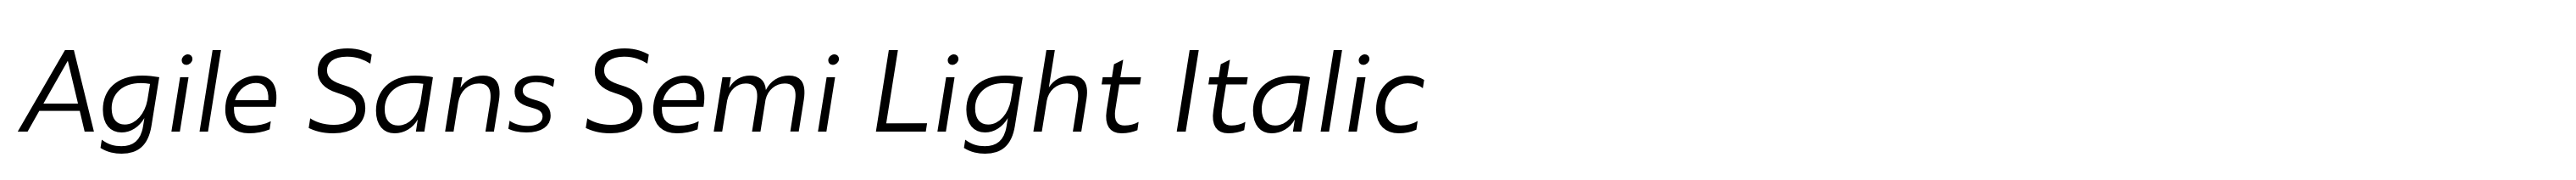 Agile Sans Semi Light Italic